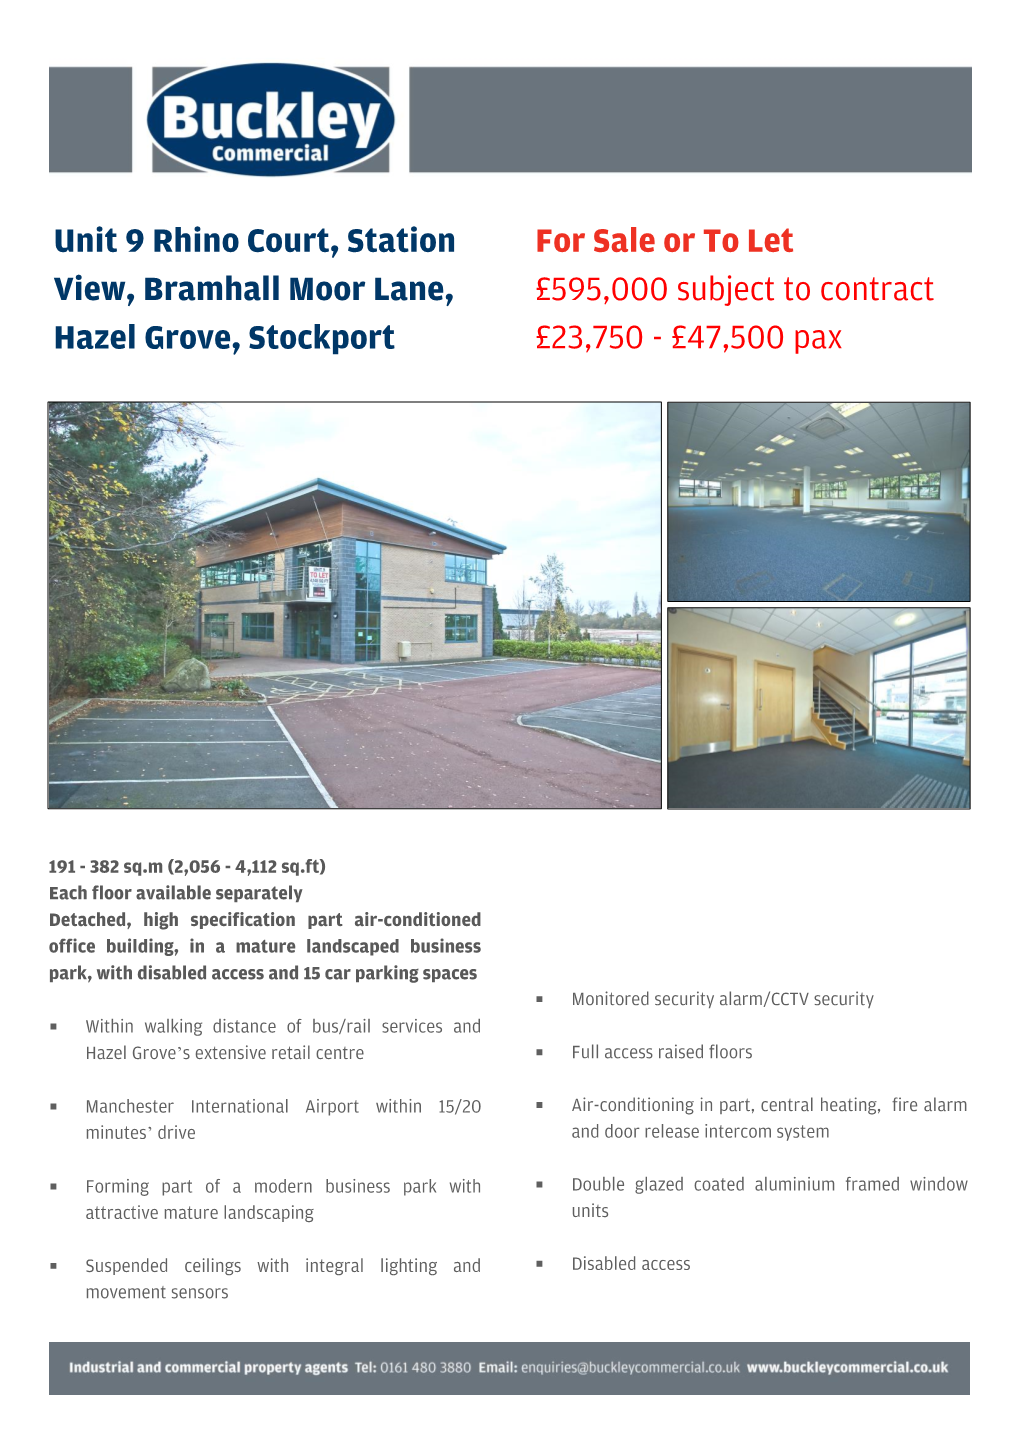 Unit 9 Rhino Court, Station View, Bramhall Moor Lane, Hazel Grove